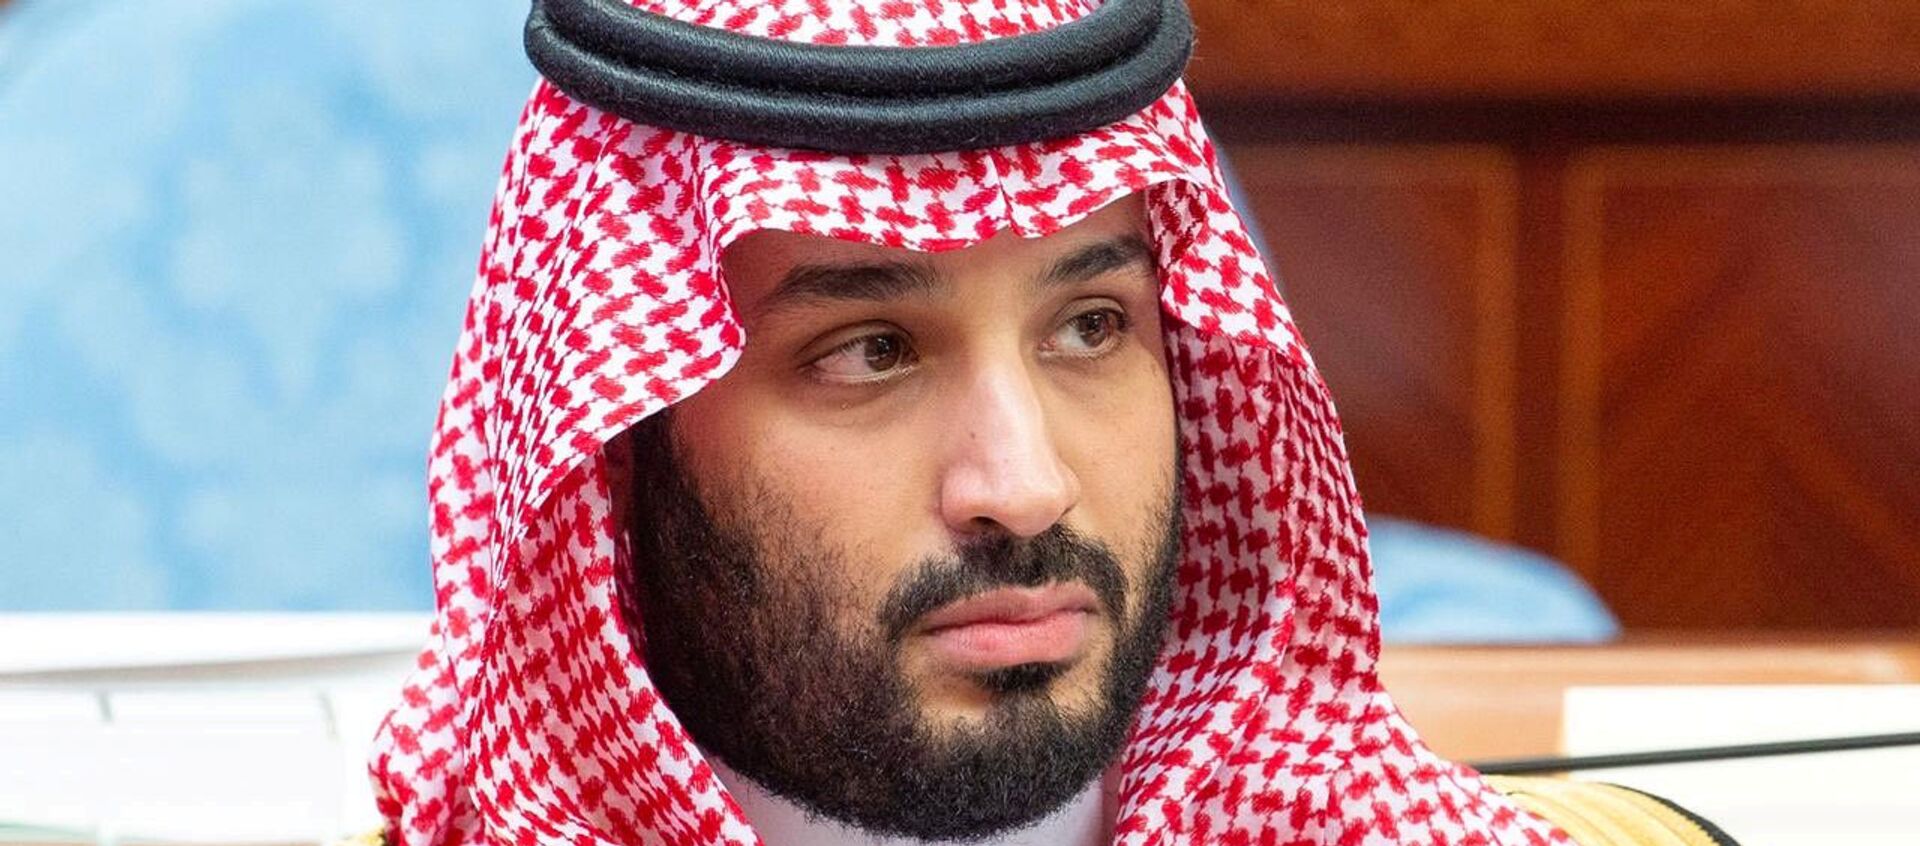 Saudi Crown Prince Mohammed bin Salman attends a session of the Shura Council in Riyadh, Saudi Arabia November 20, 2019. - Sputnik International, 1920, 21.12.2020